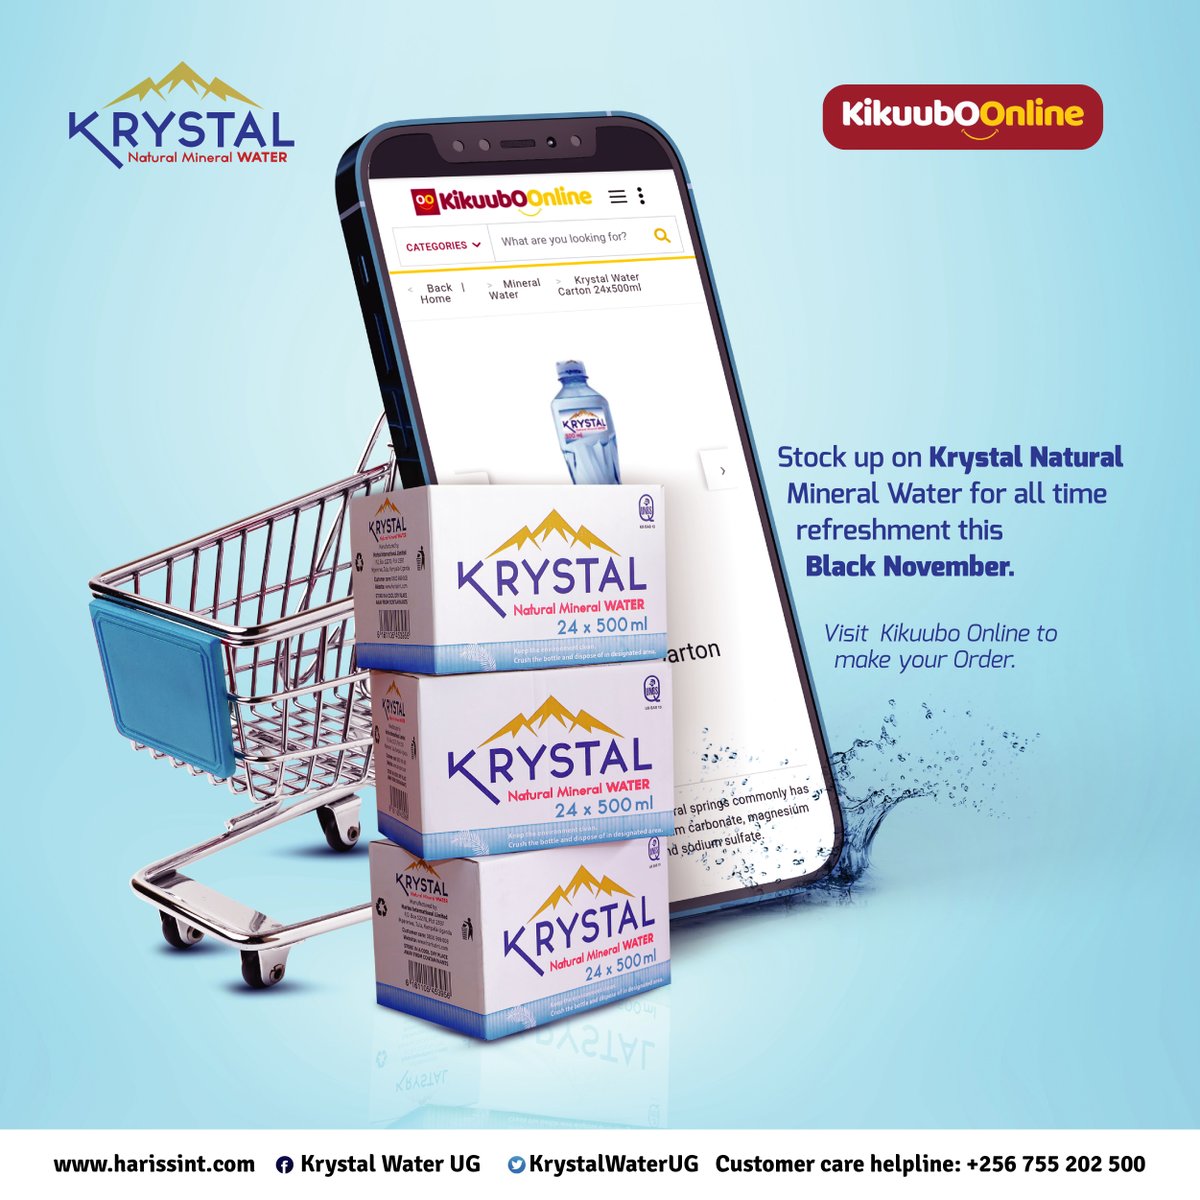 Buy a box of Krystal water from @Kikuubo 

#KrrystalIsLife | #KikuuboBlackNovember